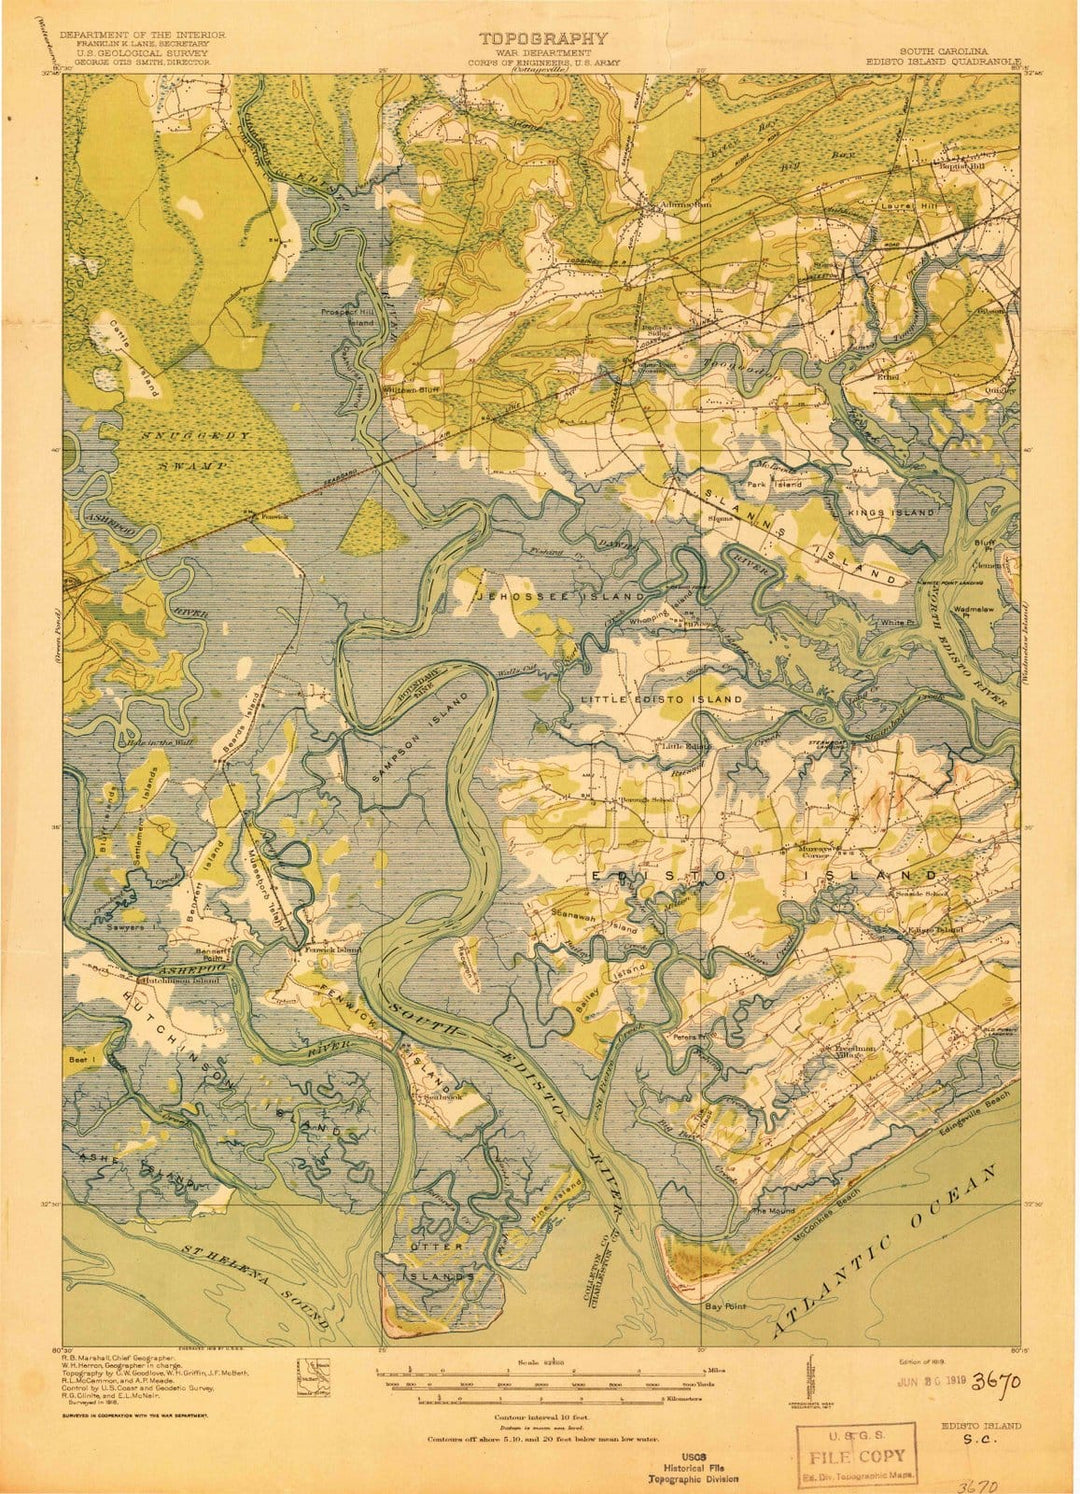 1919 Edisto Island, SC - South Carolina - USGS Topographic Map